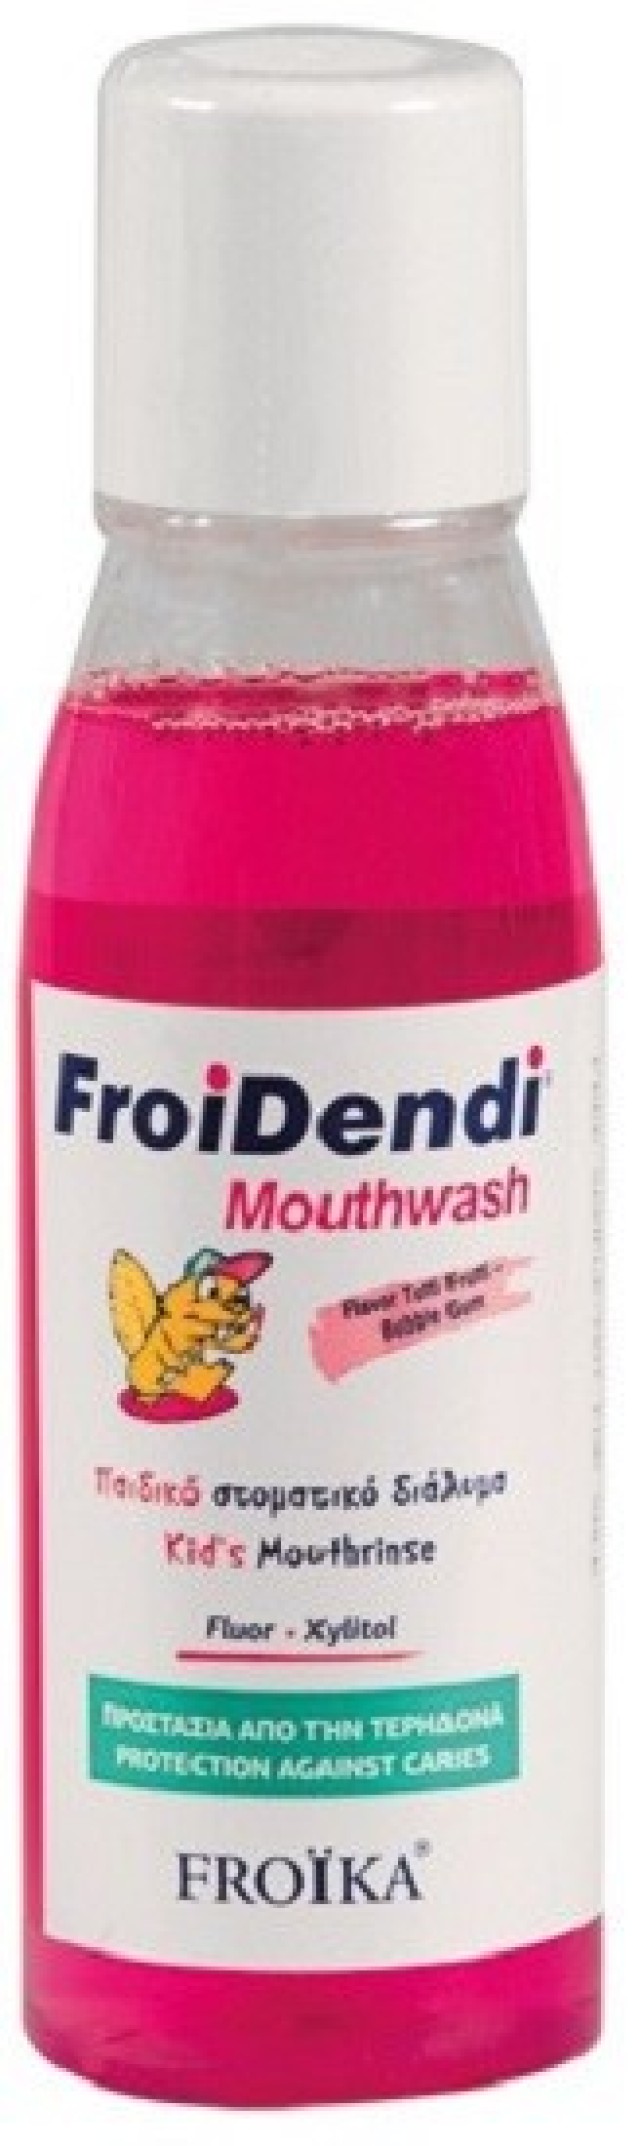 Froika Froidendi Mouthwash Στοματικό Διάλυμα για Προστασία των Νεογιλών Δοντιών 250ml